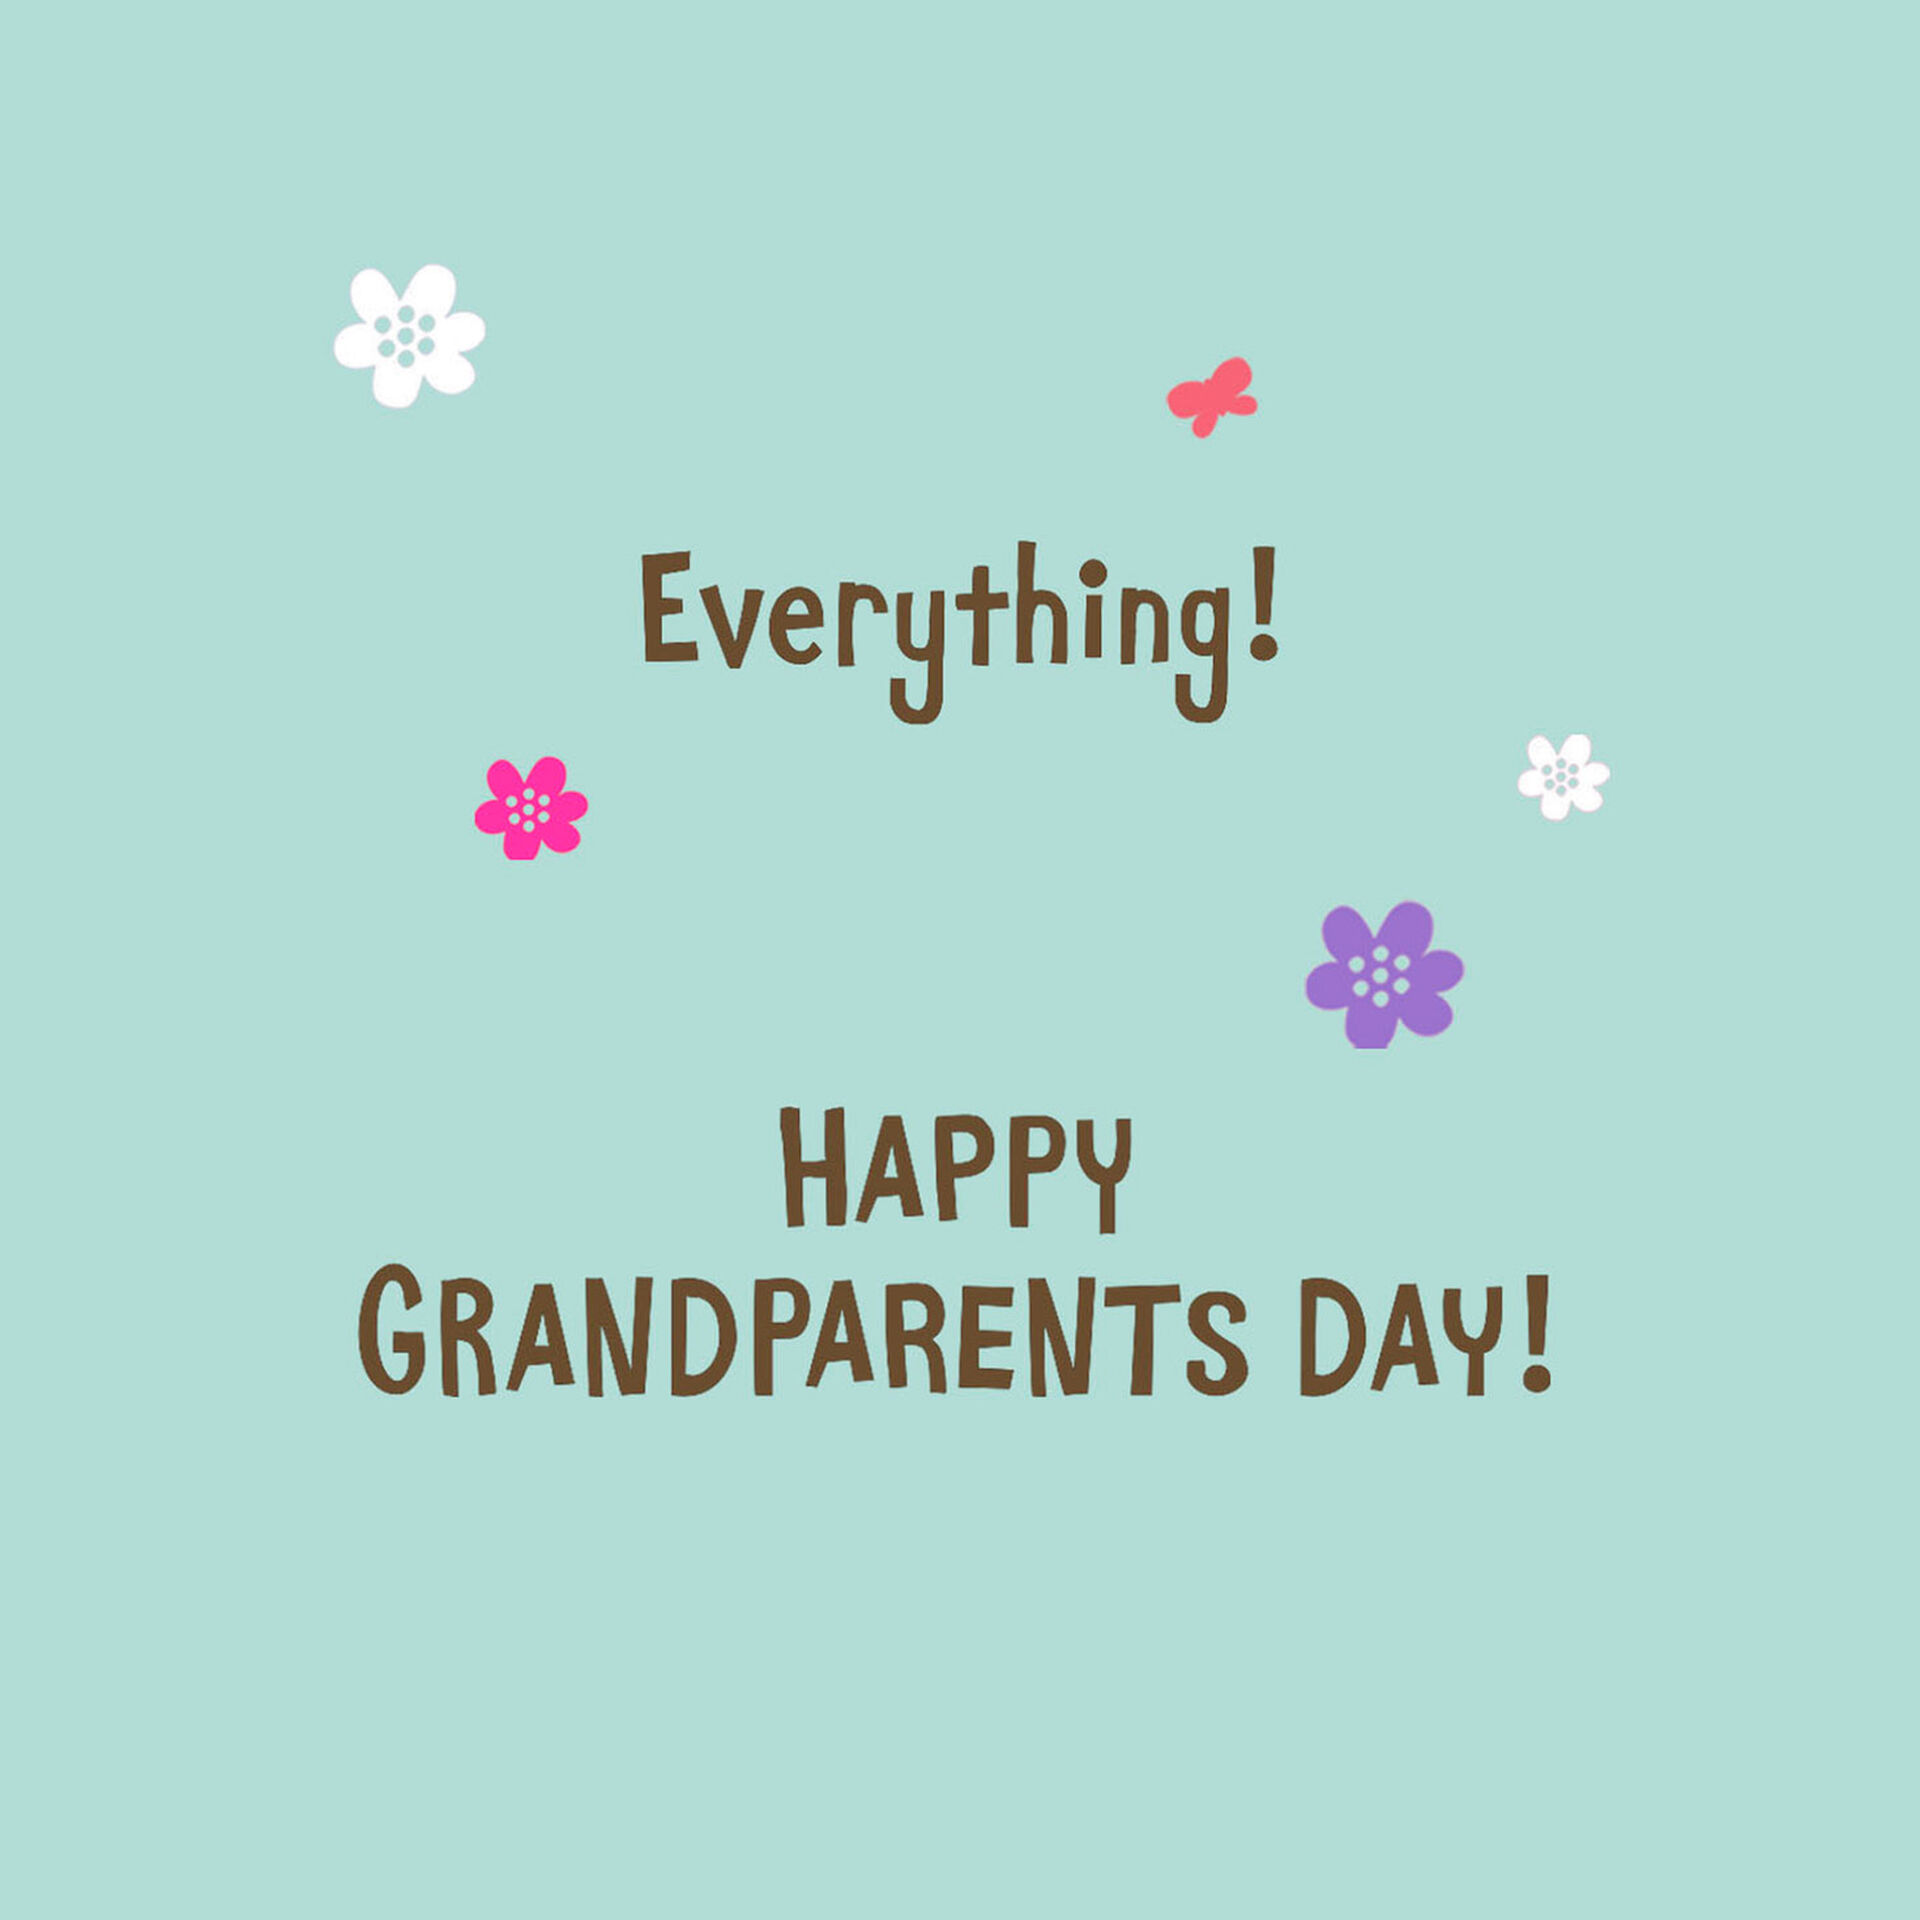 Download Grandma And Grandpa Bear Grandparents Day Card Greeting Cards Hallmark